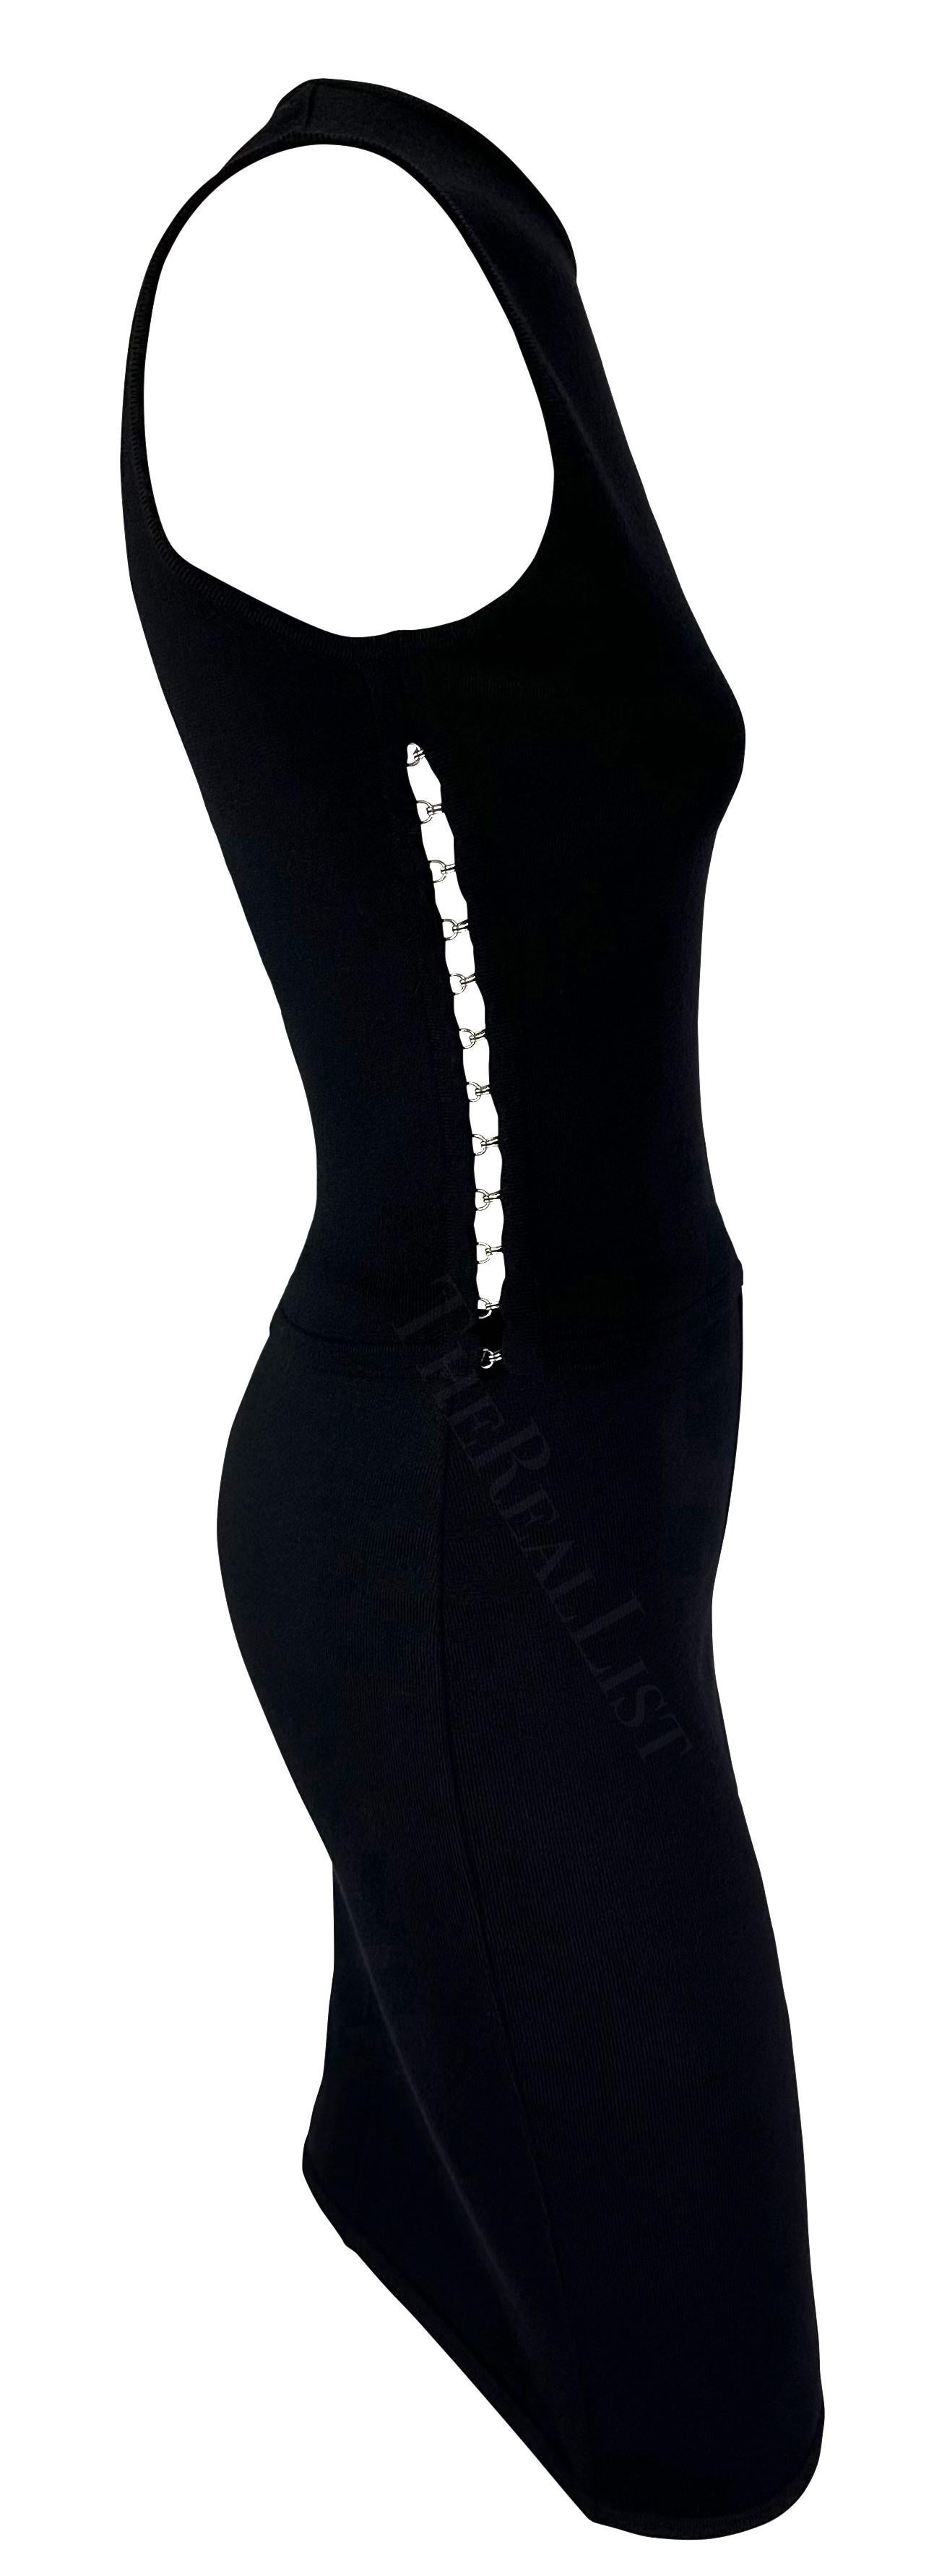 Women's S/S 2002 Gianni Versace by Donatella Black Knit Tank Top Skirt Set  For Sale